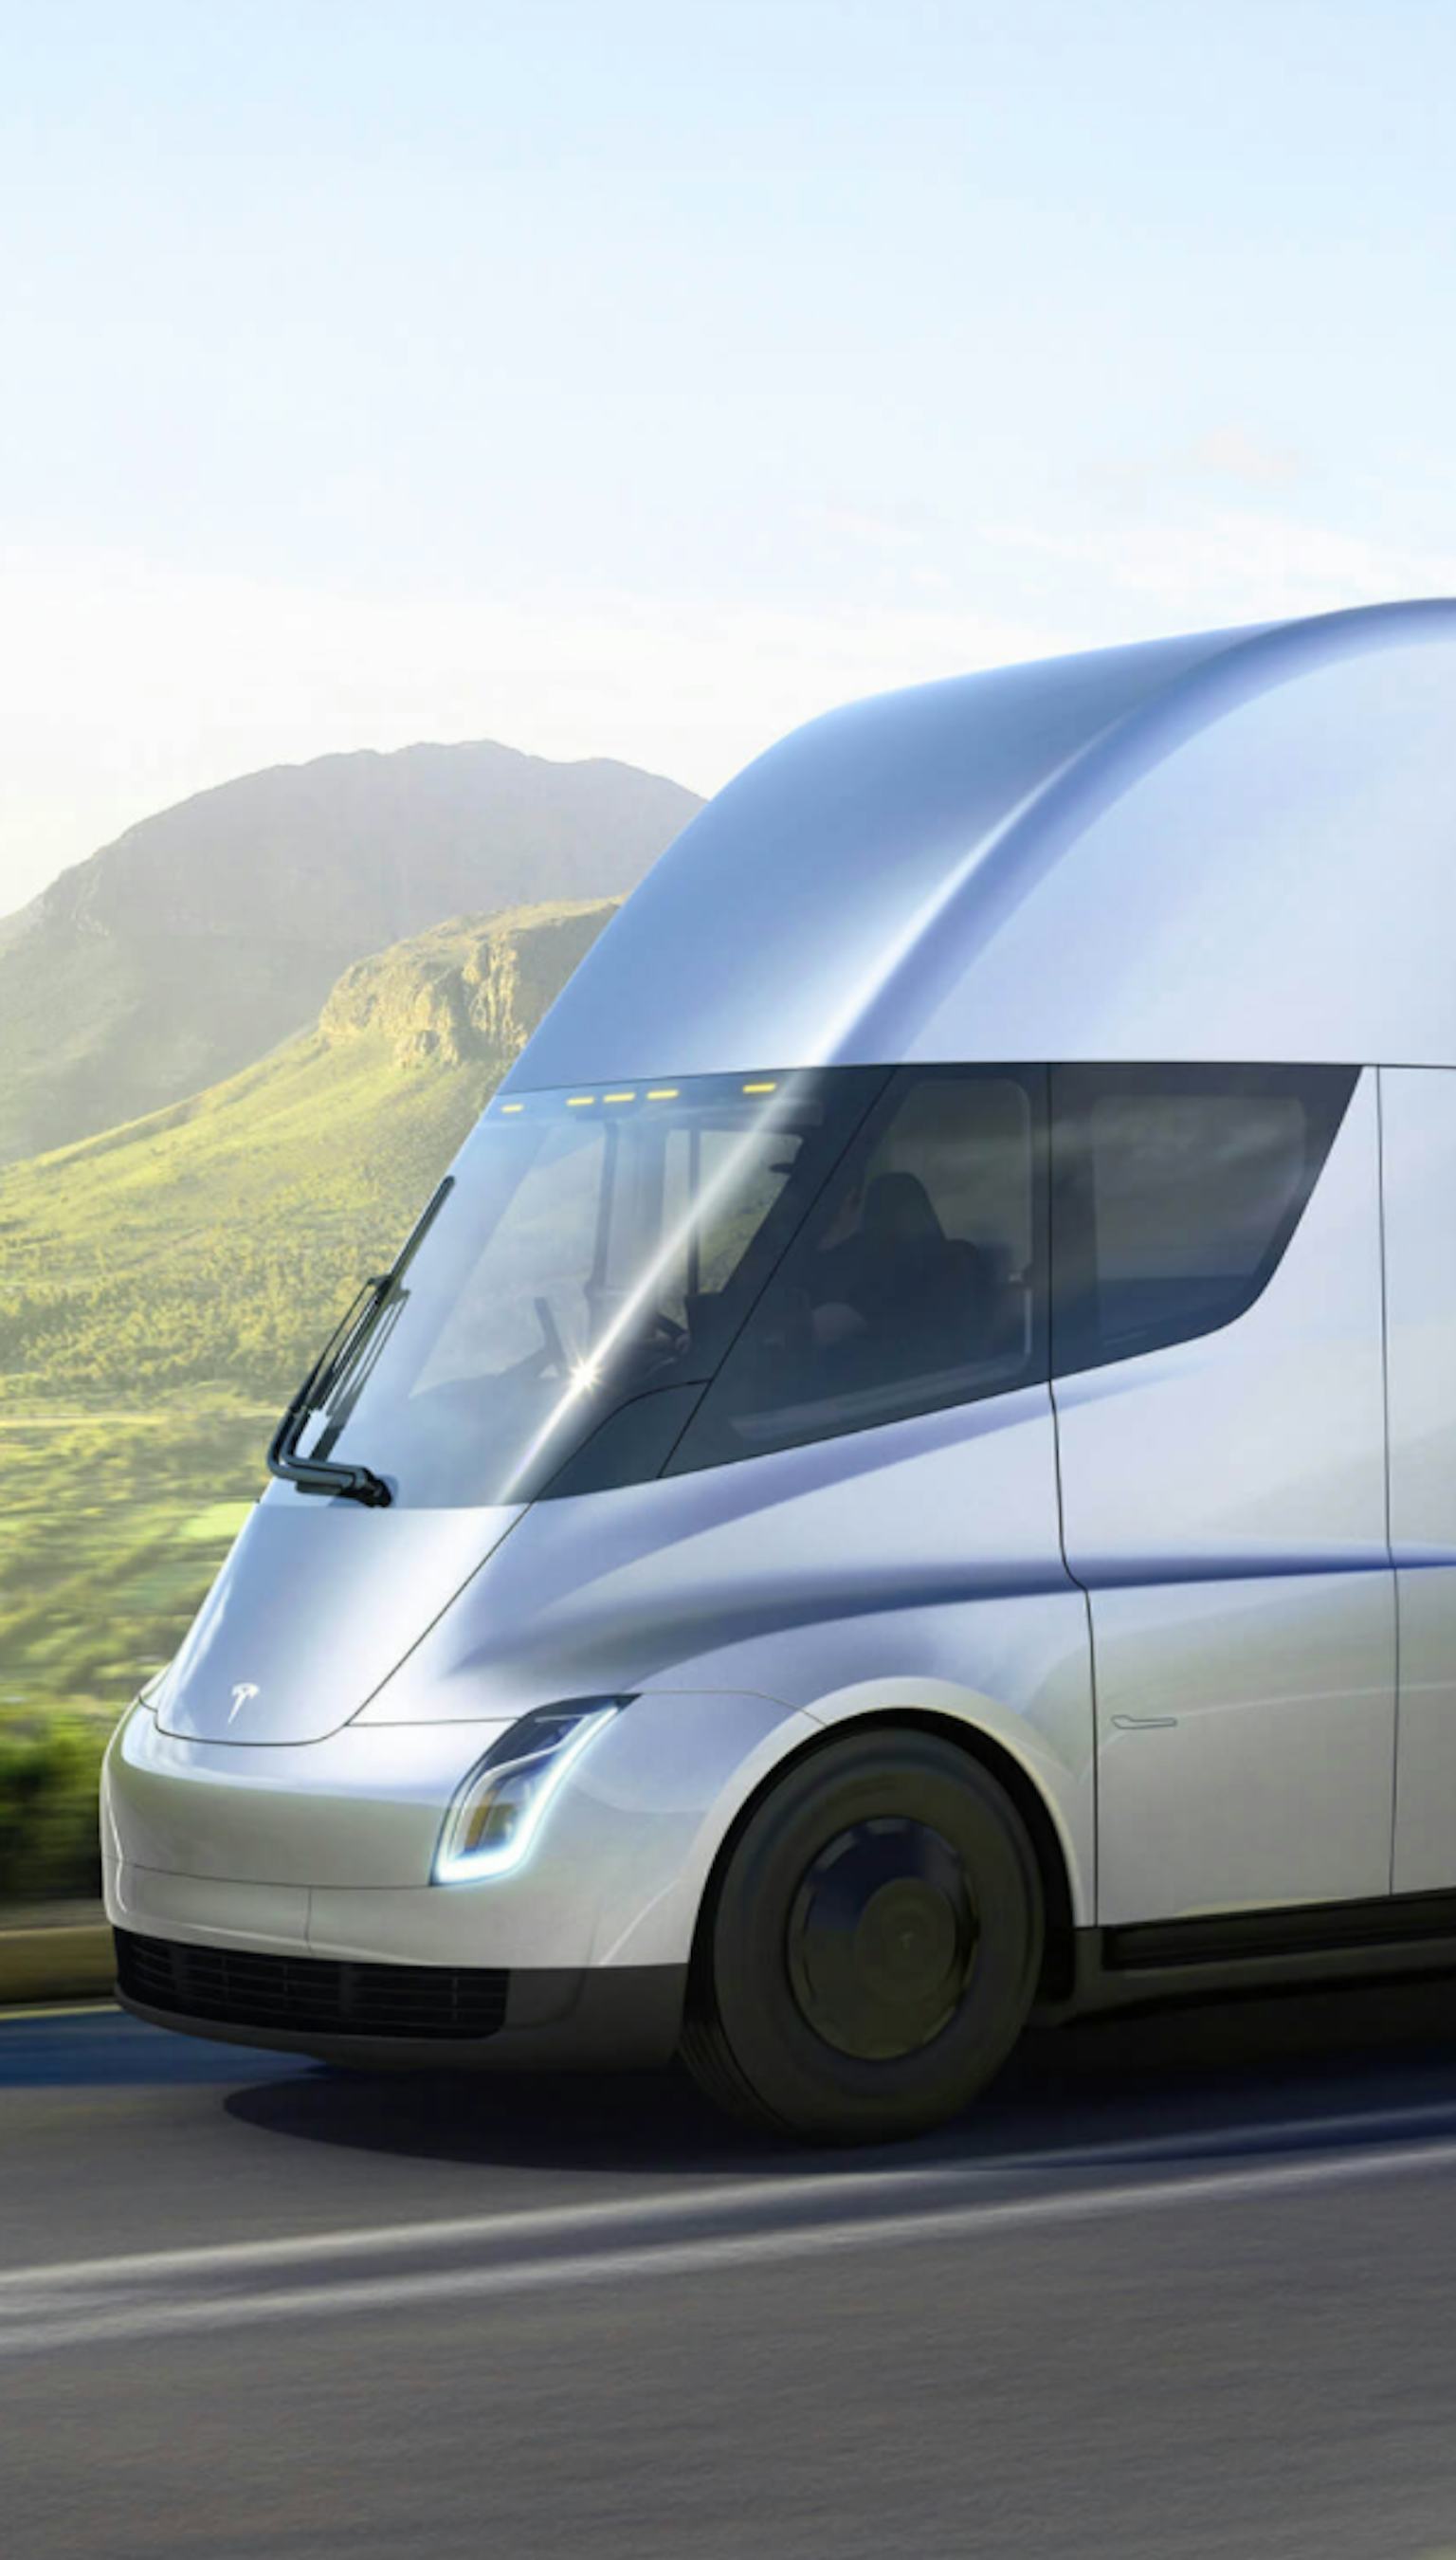 Watch Tesla's new self-driving Semi truck prototype in action